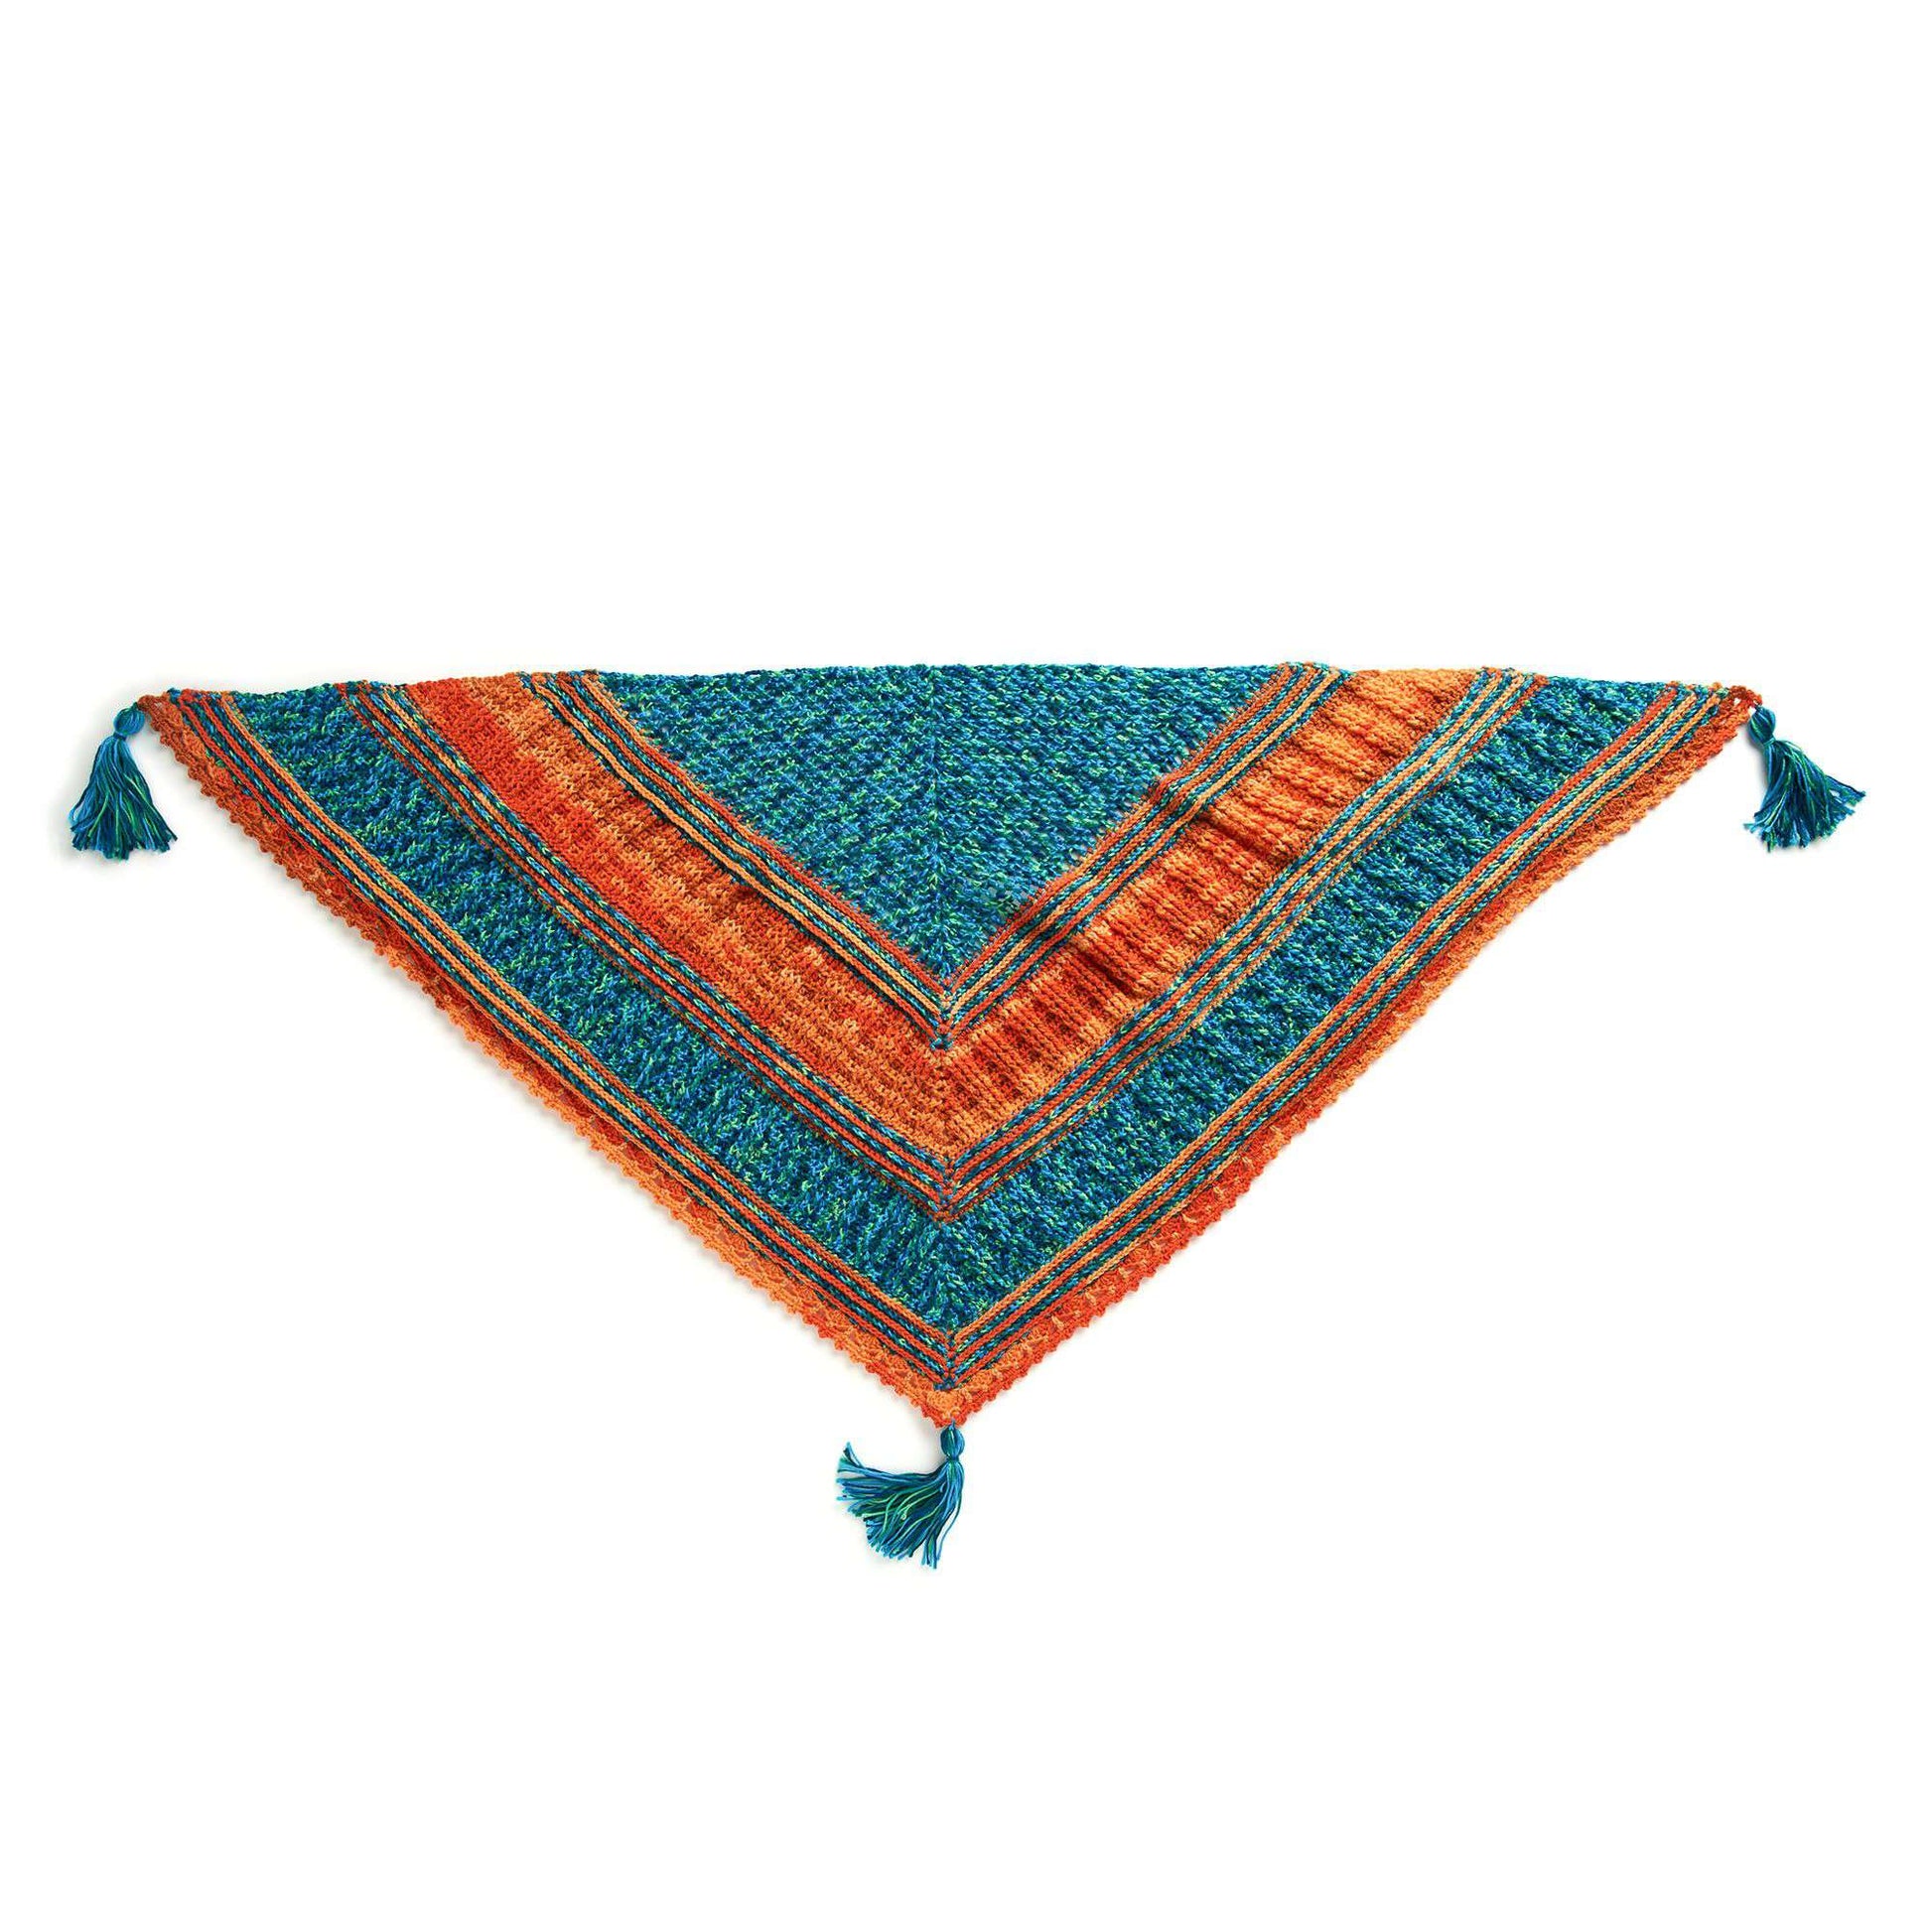 Free Caron Textured Triangular Crochet Shawl Pattern